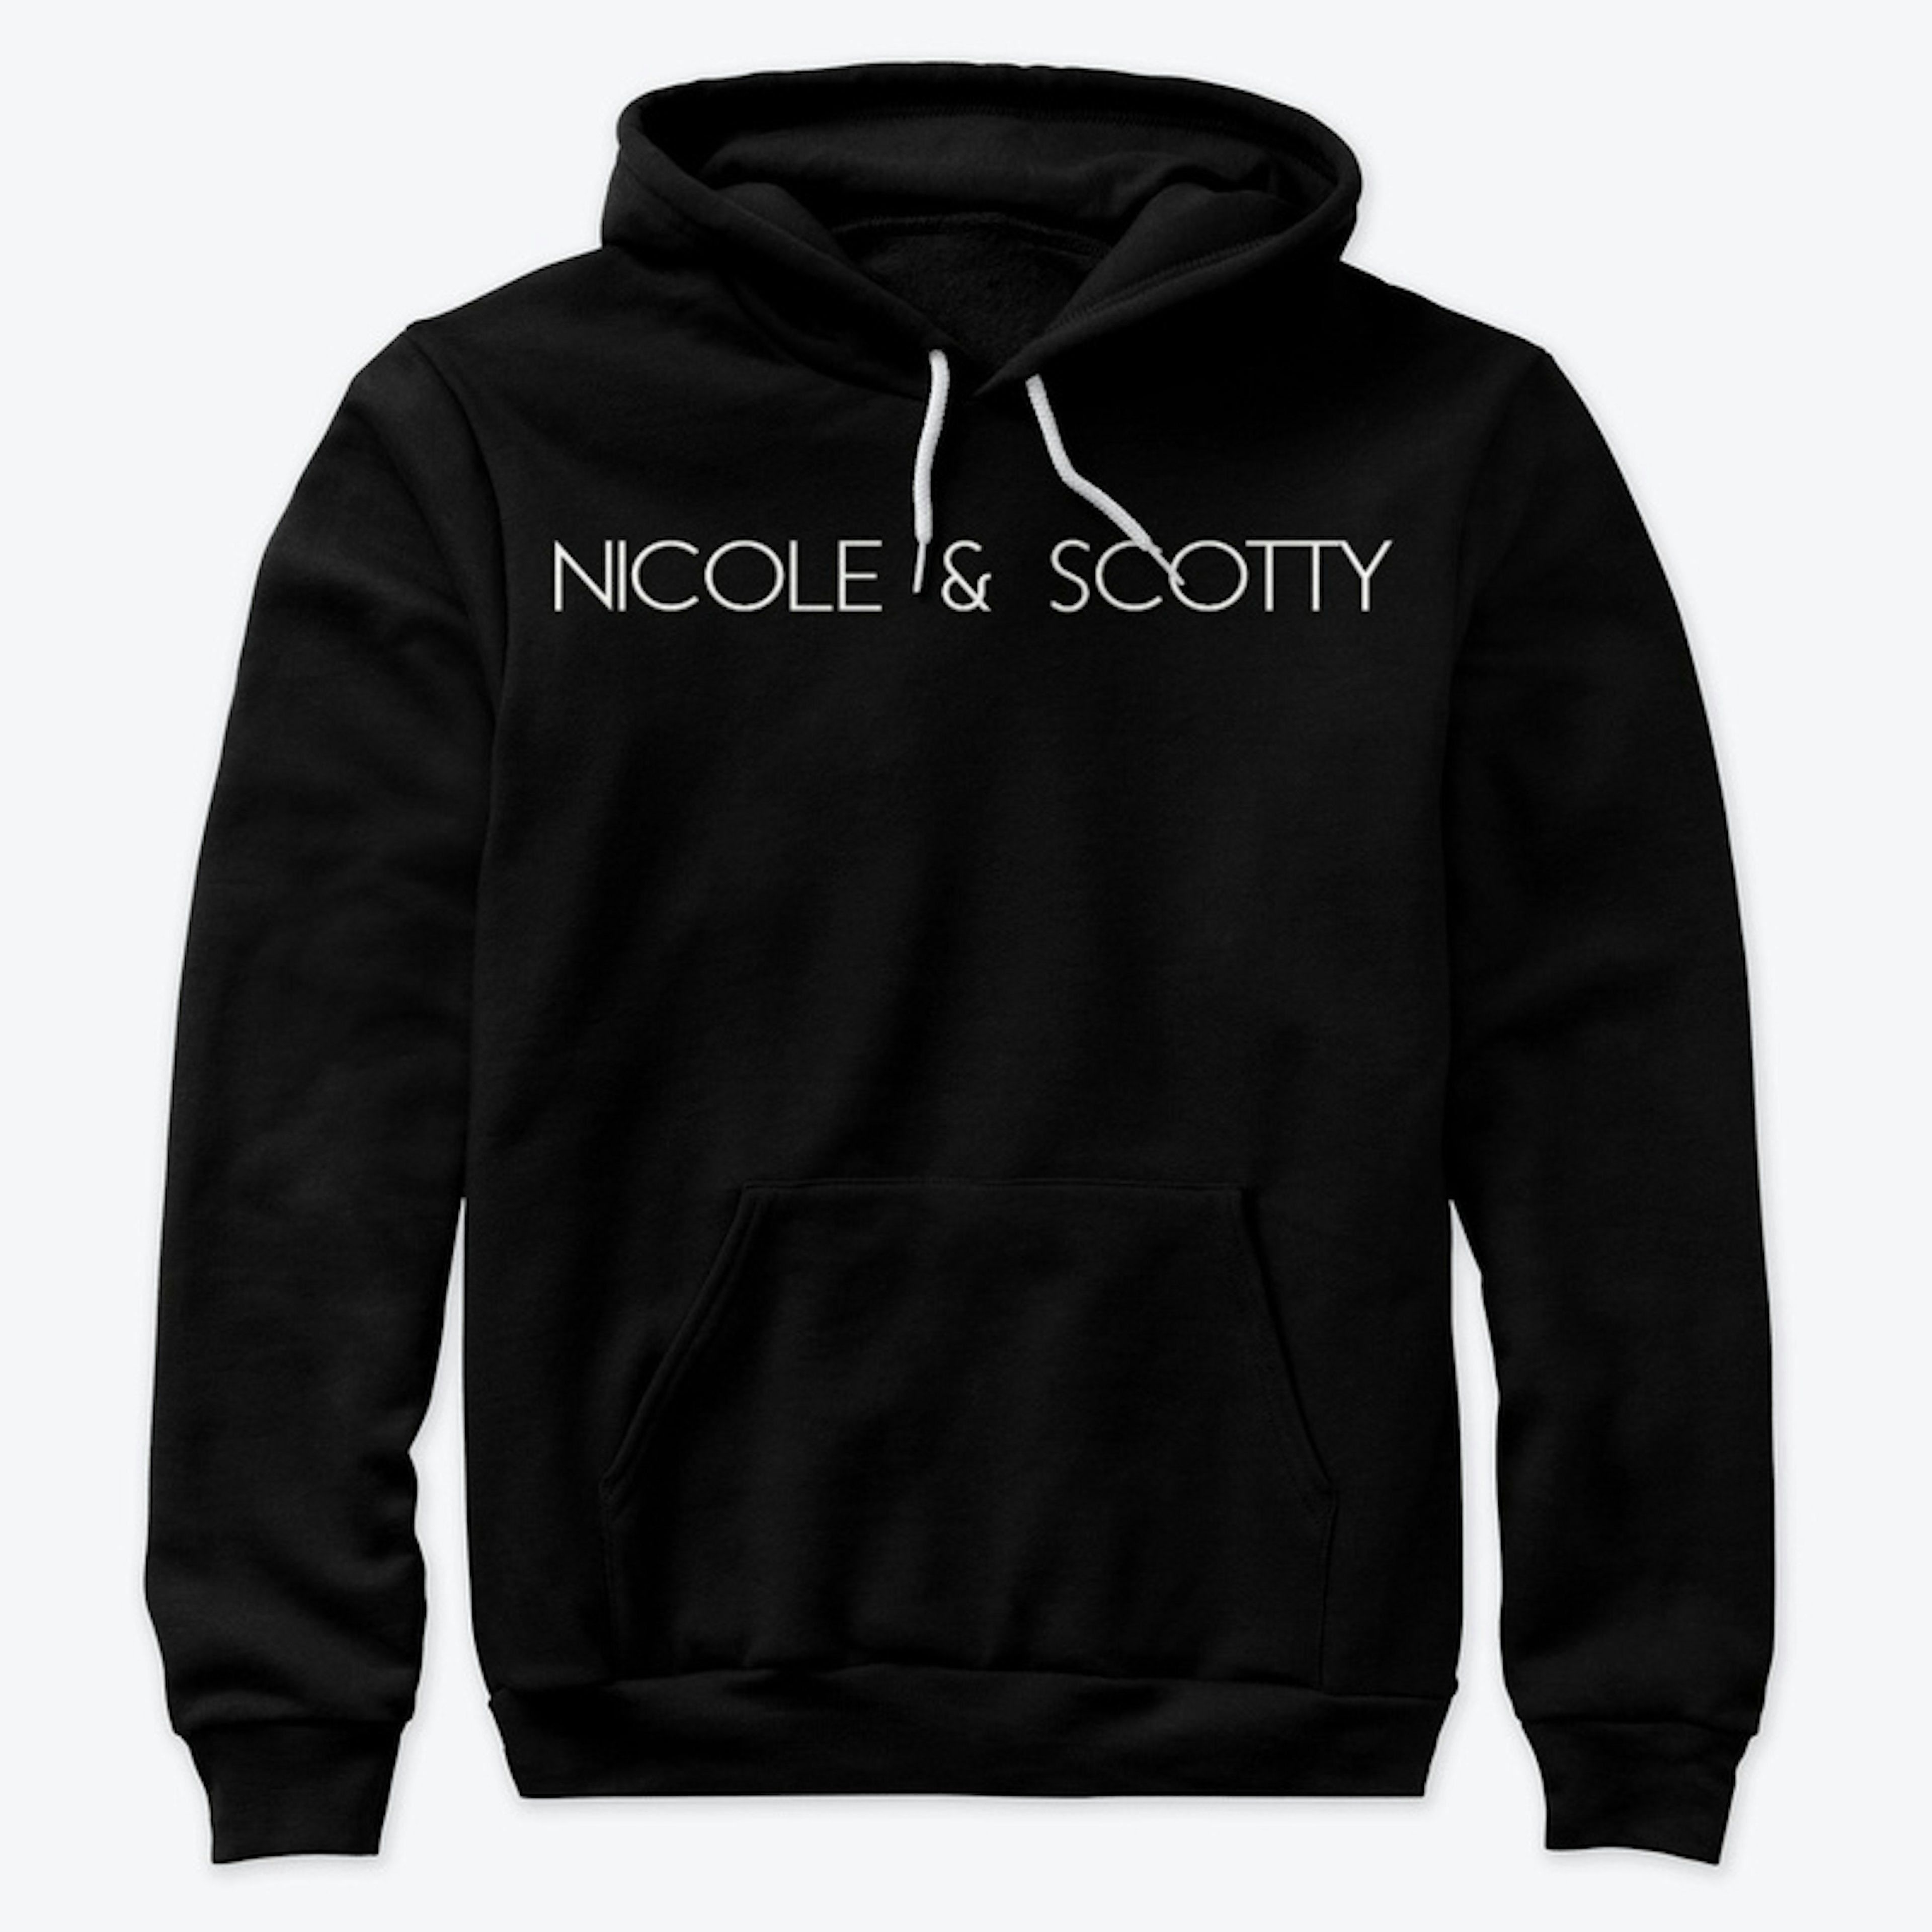 Nicole & Scotty Premium Black Hoodie